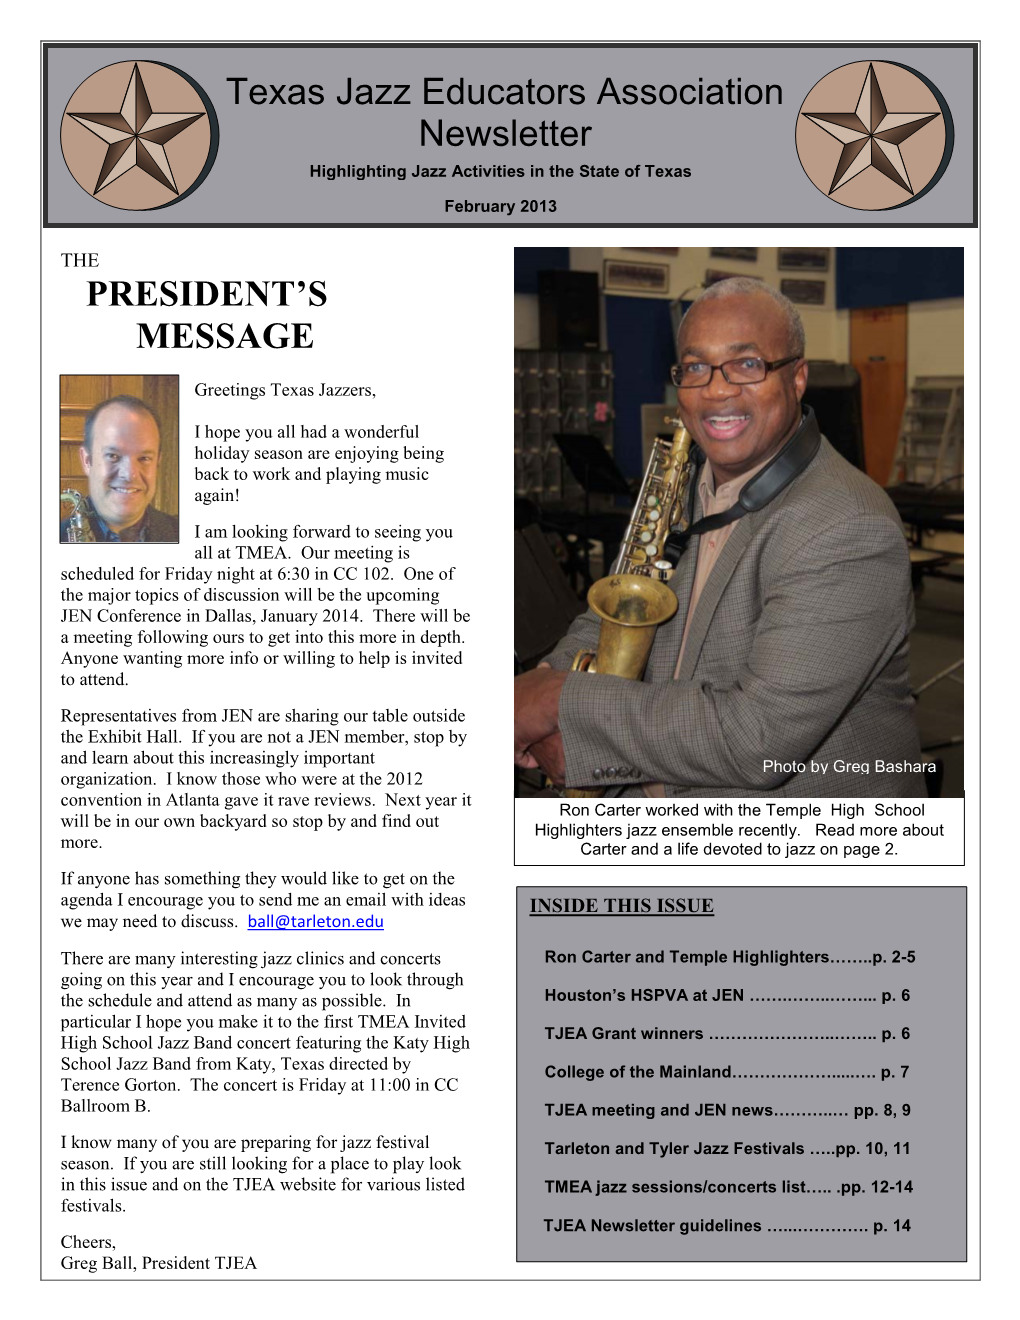 Texas Jazz Educators Association Newsletter PRESIDENT's MESSAGE